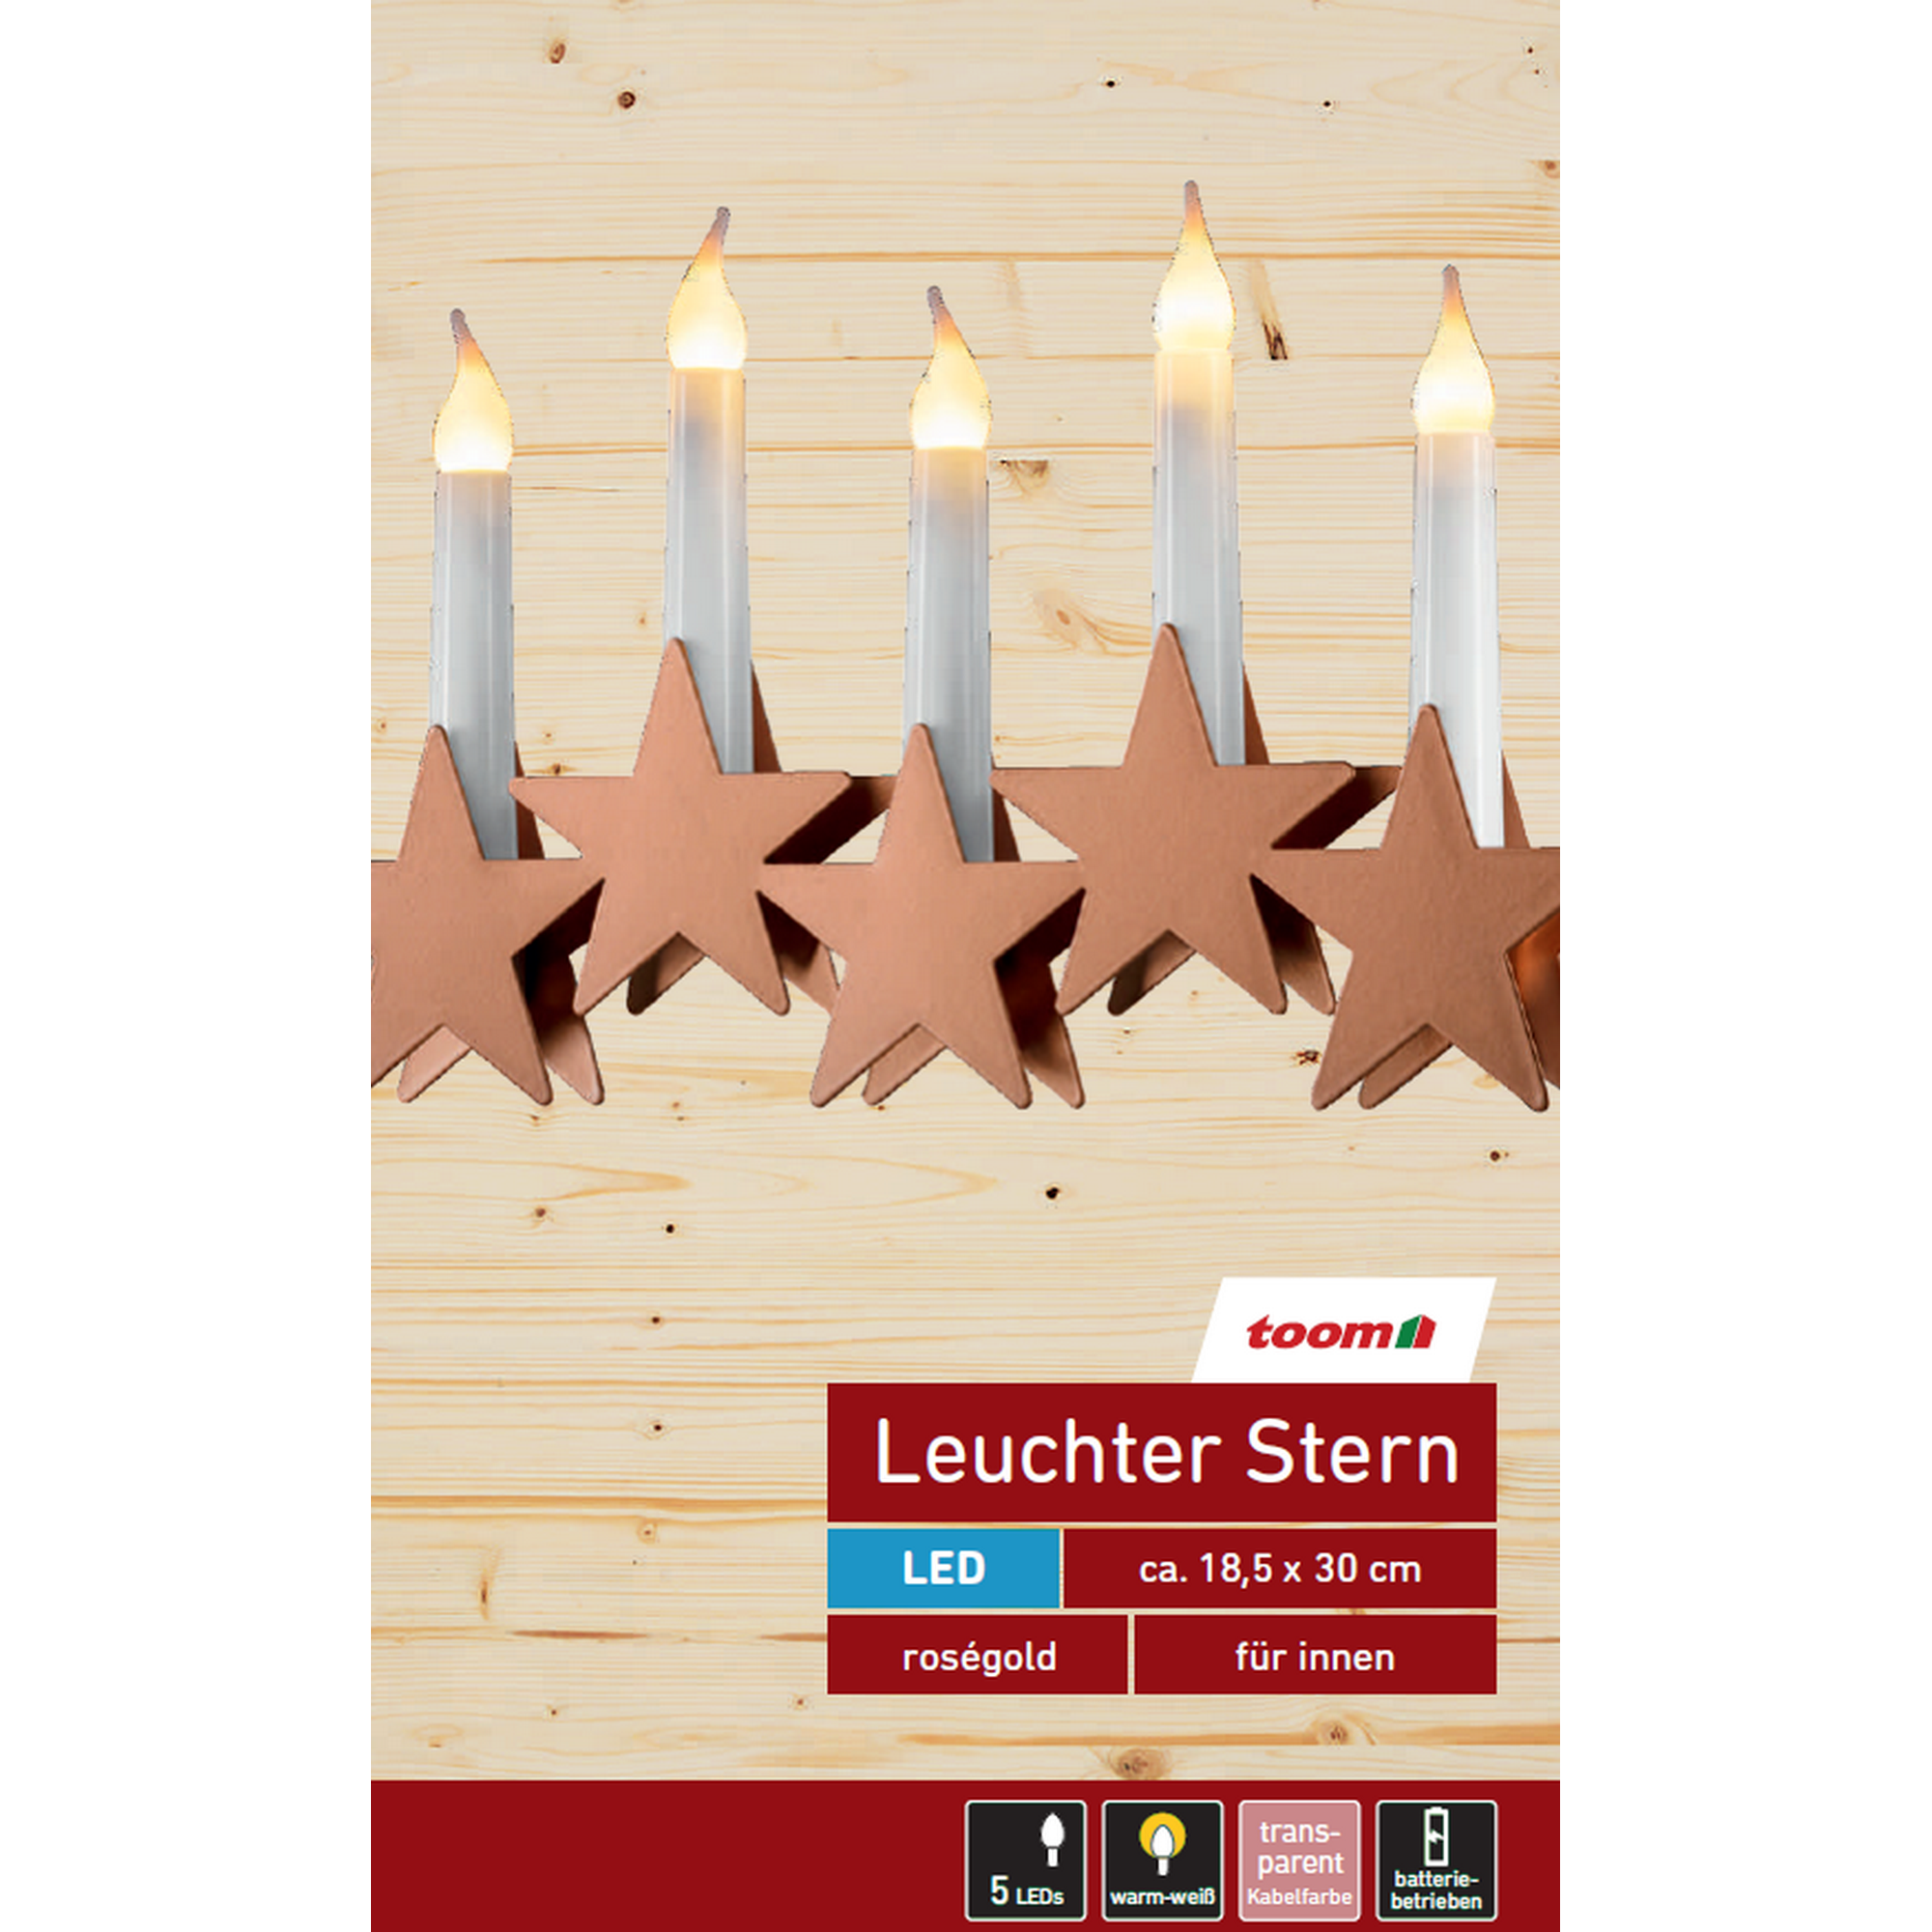 LED-Leuchter 'Stern' roségold 5 LEDs warmweiß 30 x 18,5 cm + product picture